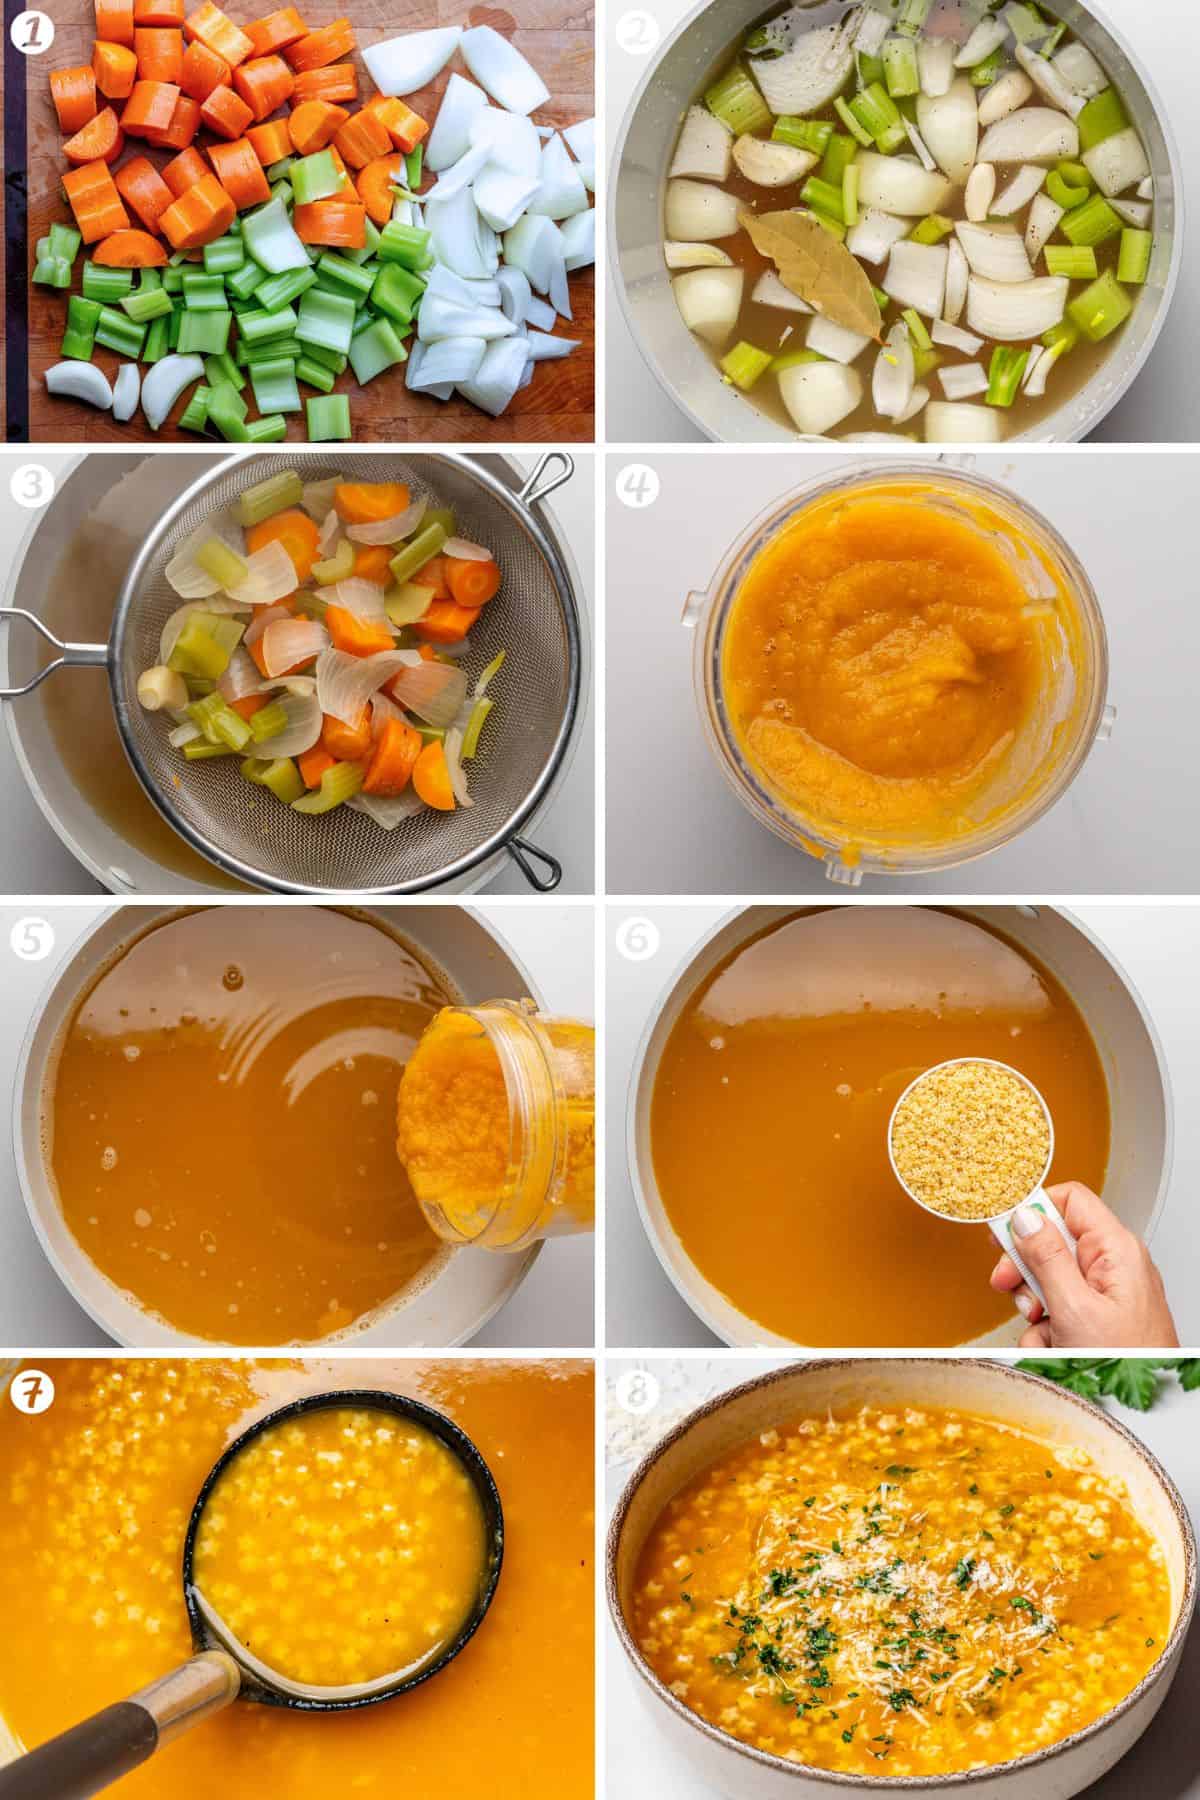 Steps on how to make pastina soup